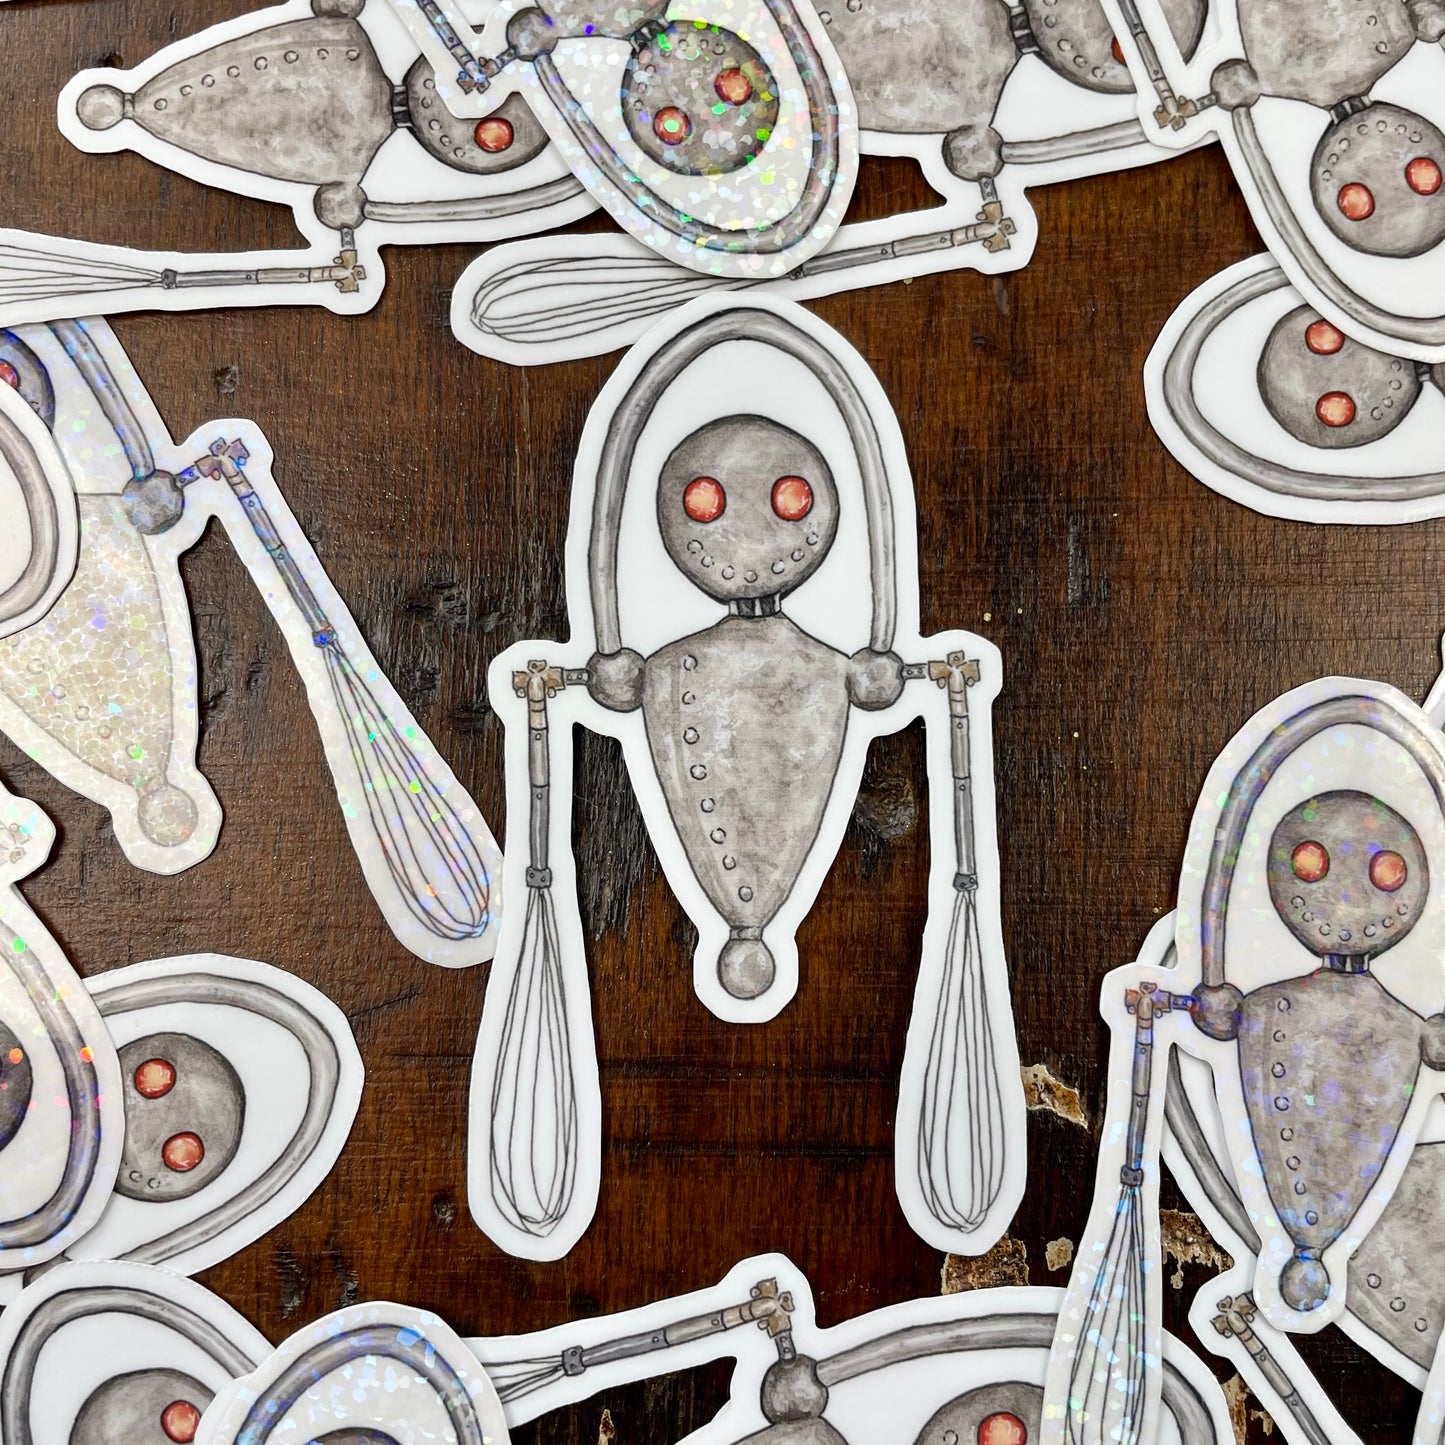 Edward Scissorhands Whisk Robot Sticker (Obscure Objects series)